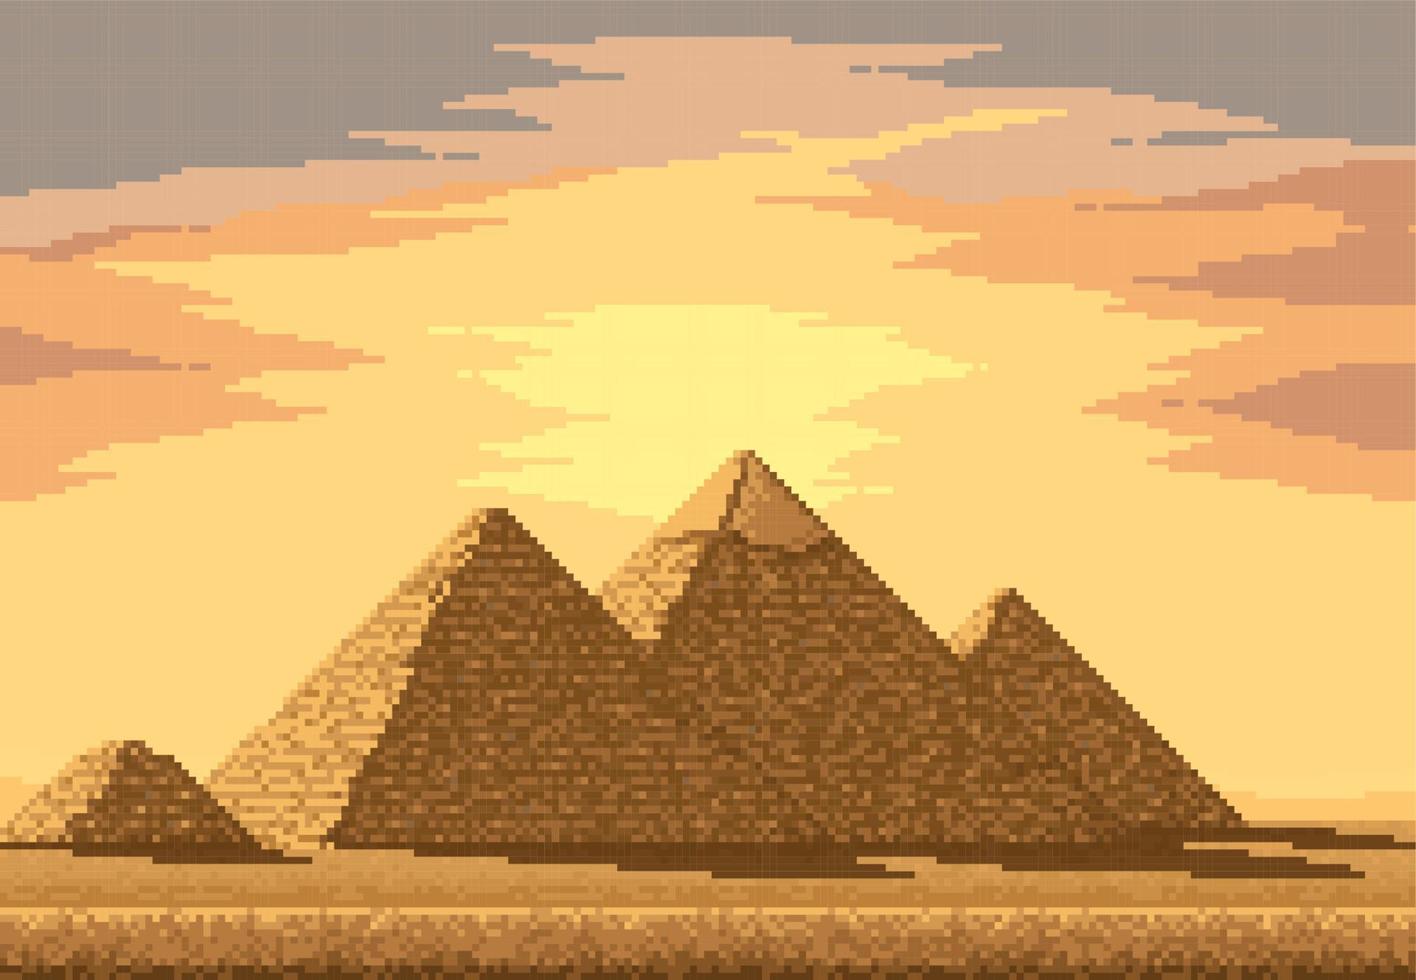 Pyramids in Egypt desert 8bit pixel background vector